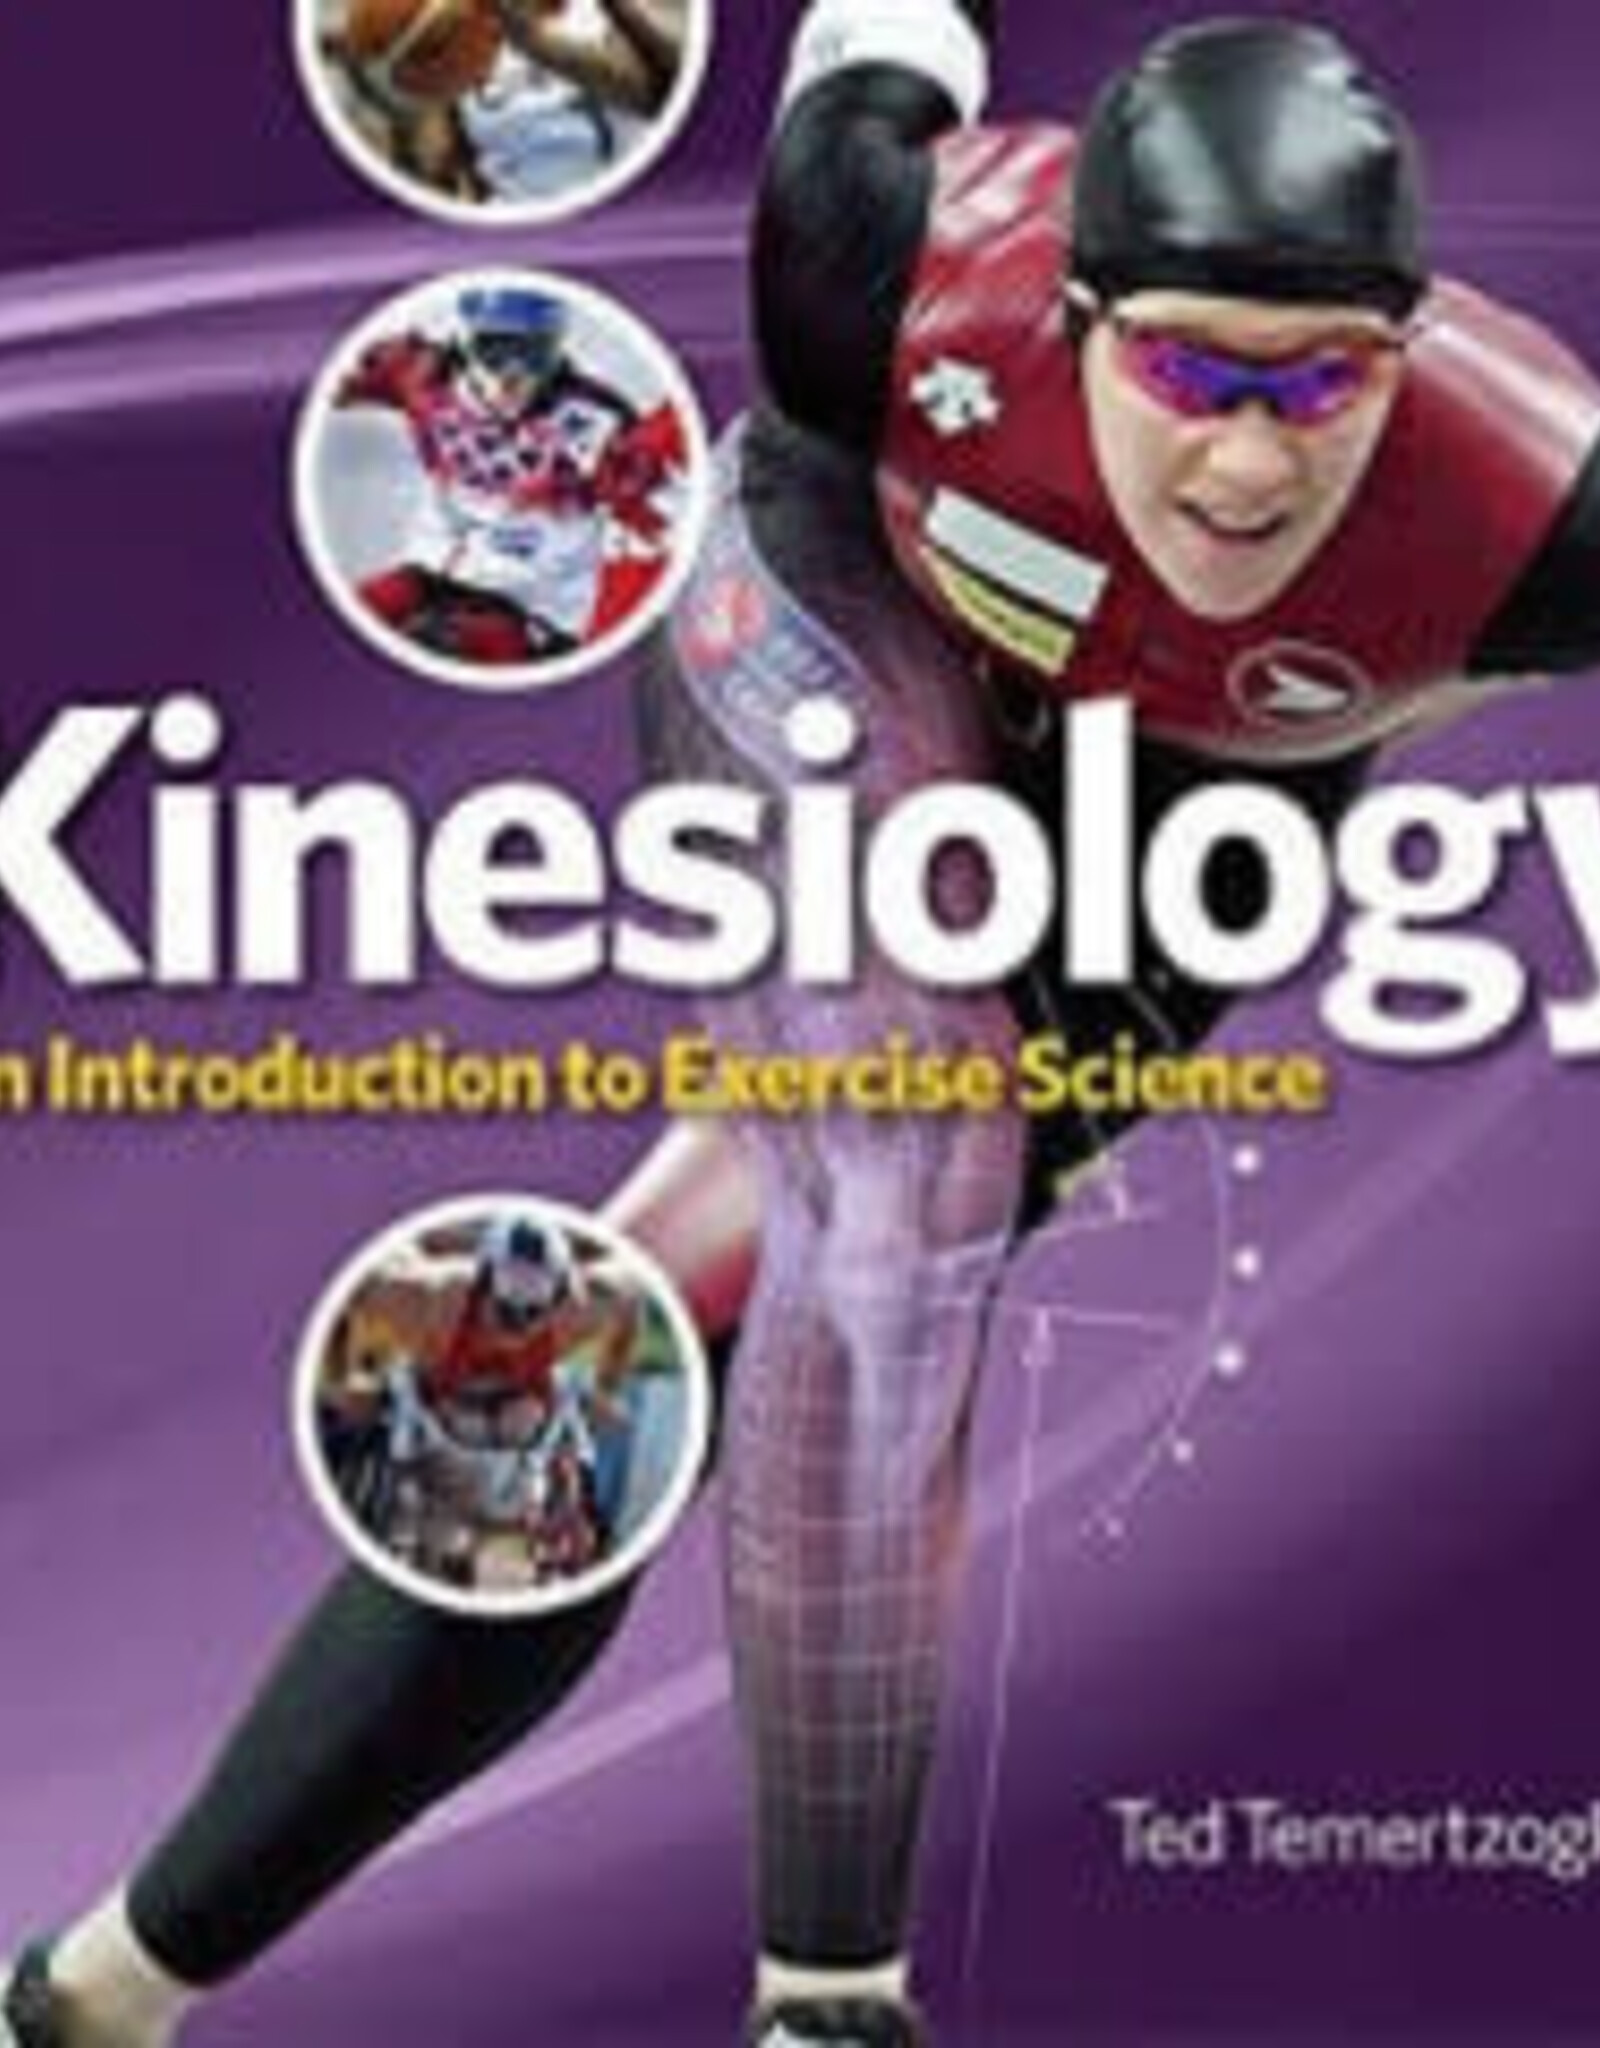 Kinesiology - Etext